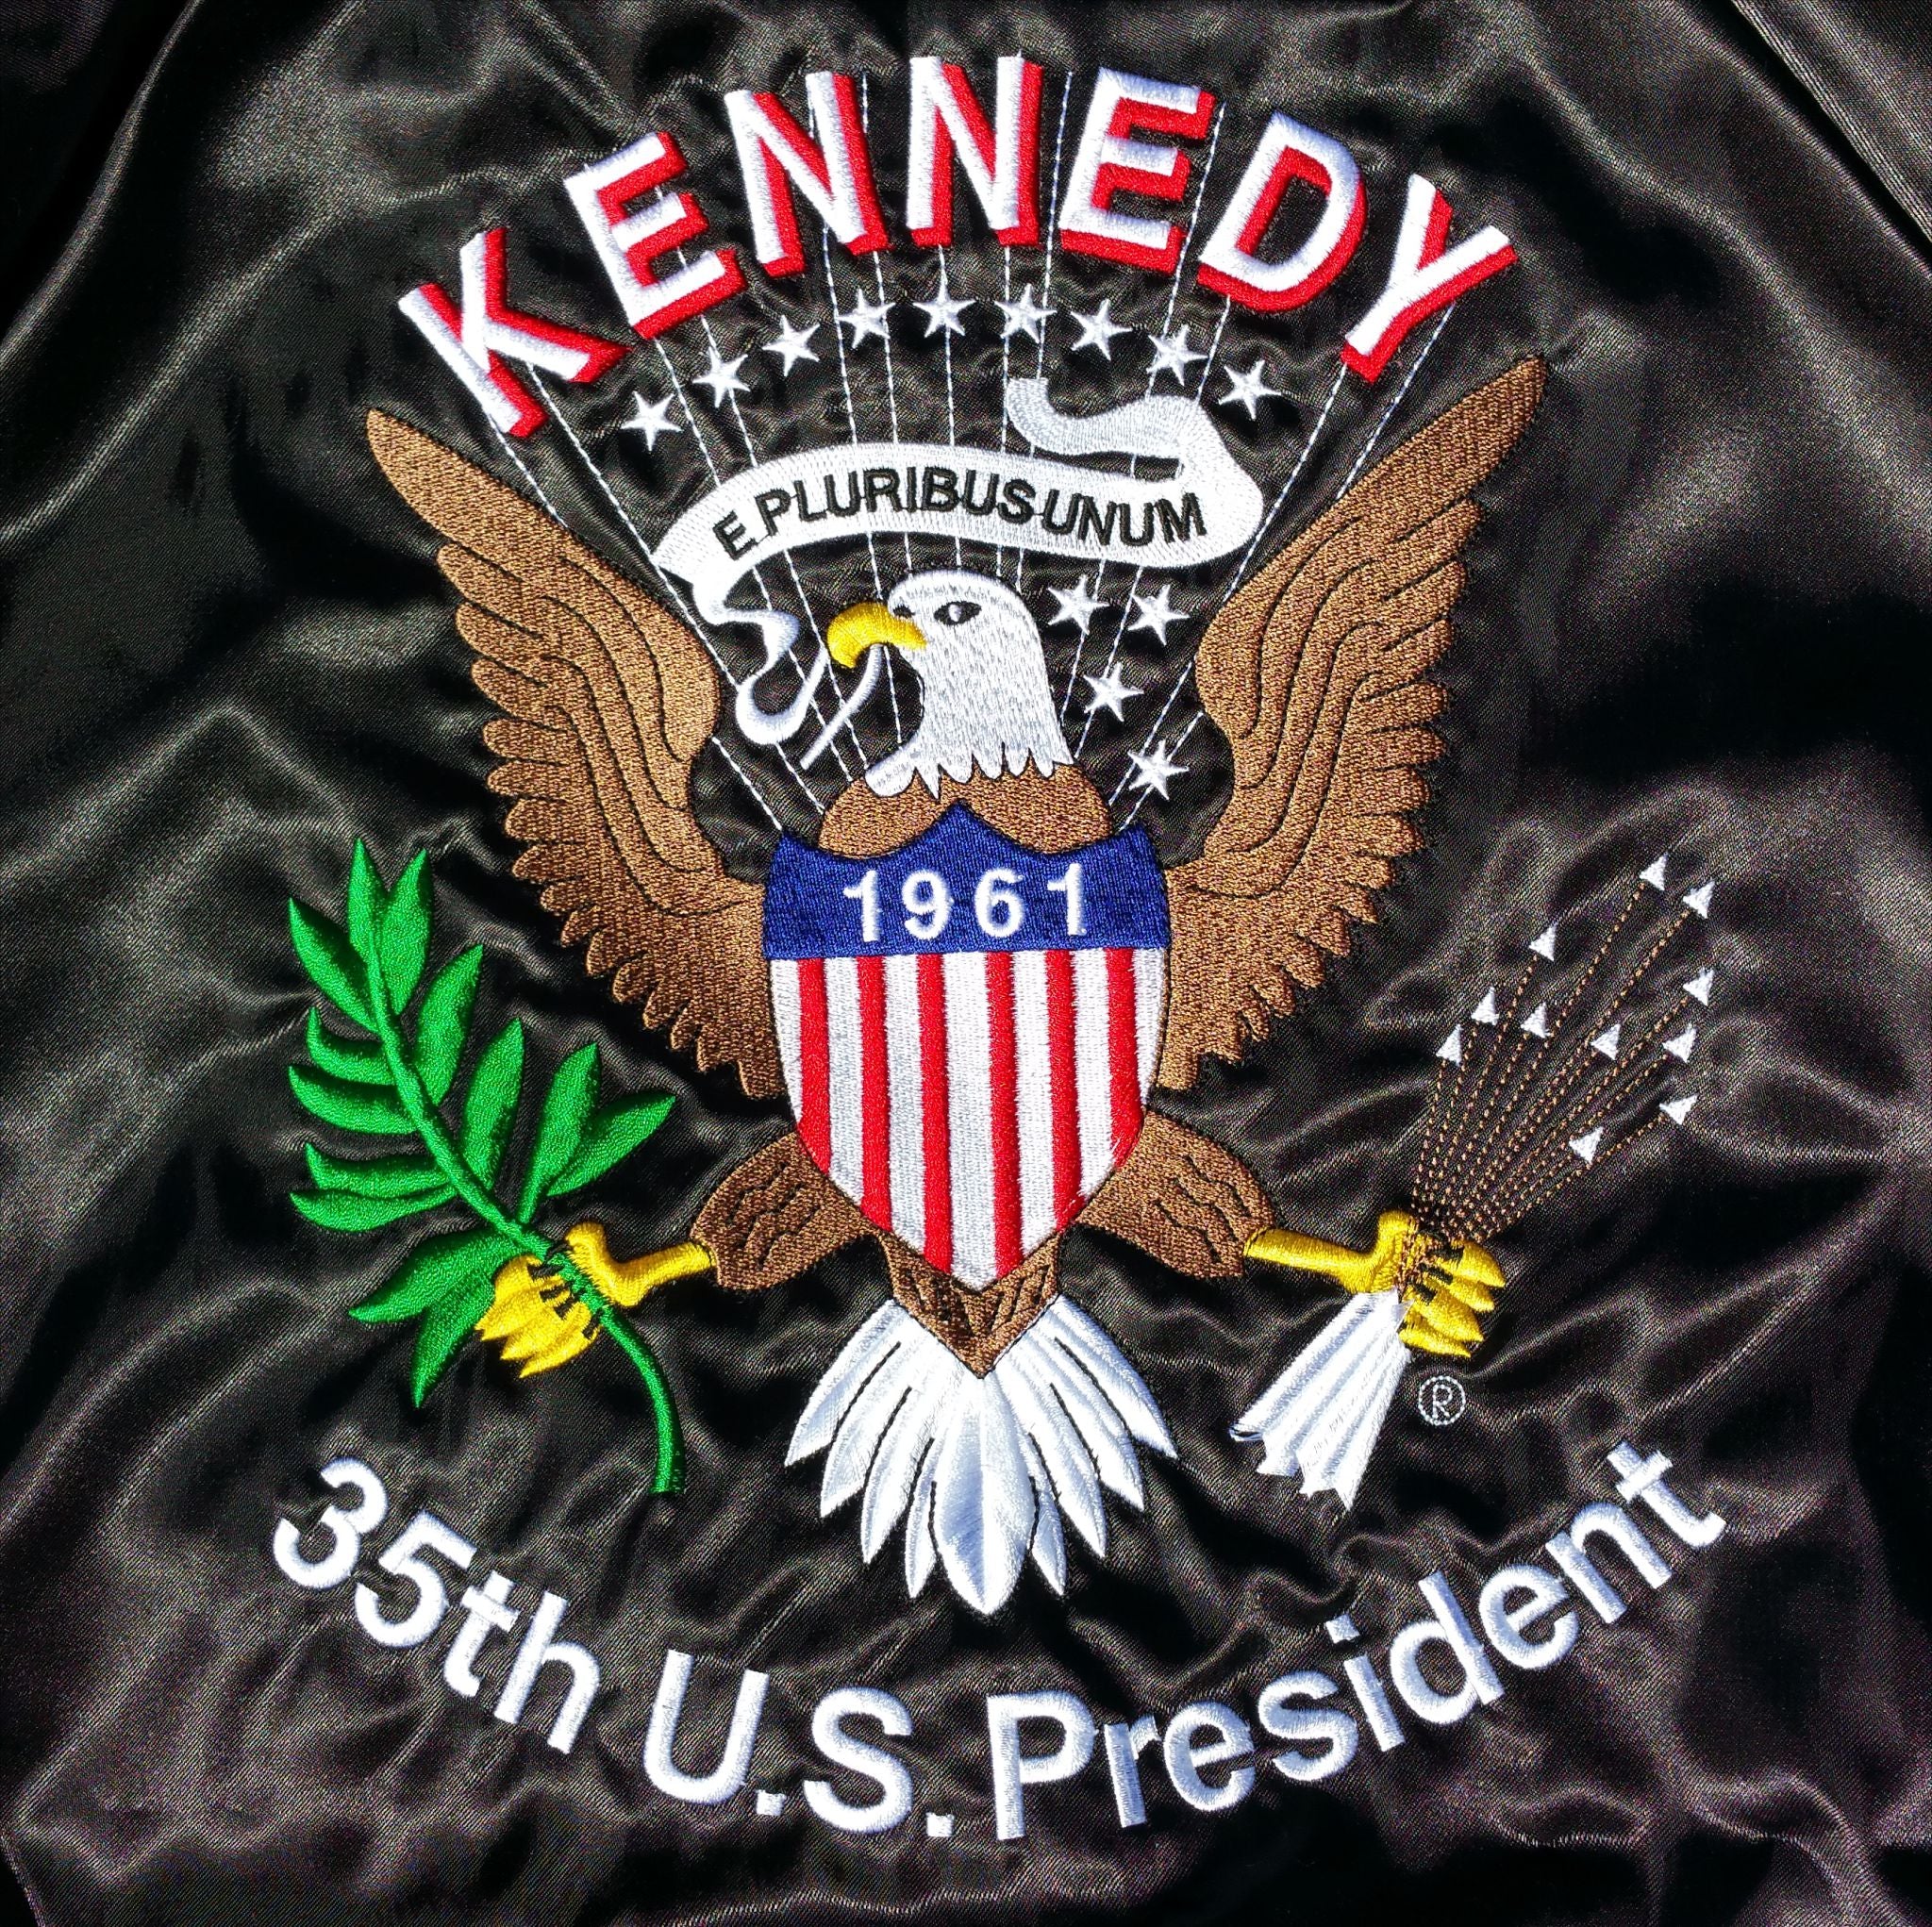 35th Kennedy USA Presidential Black Satin Jacket